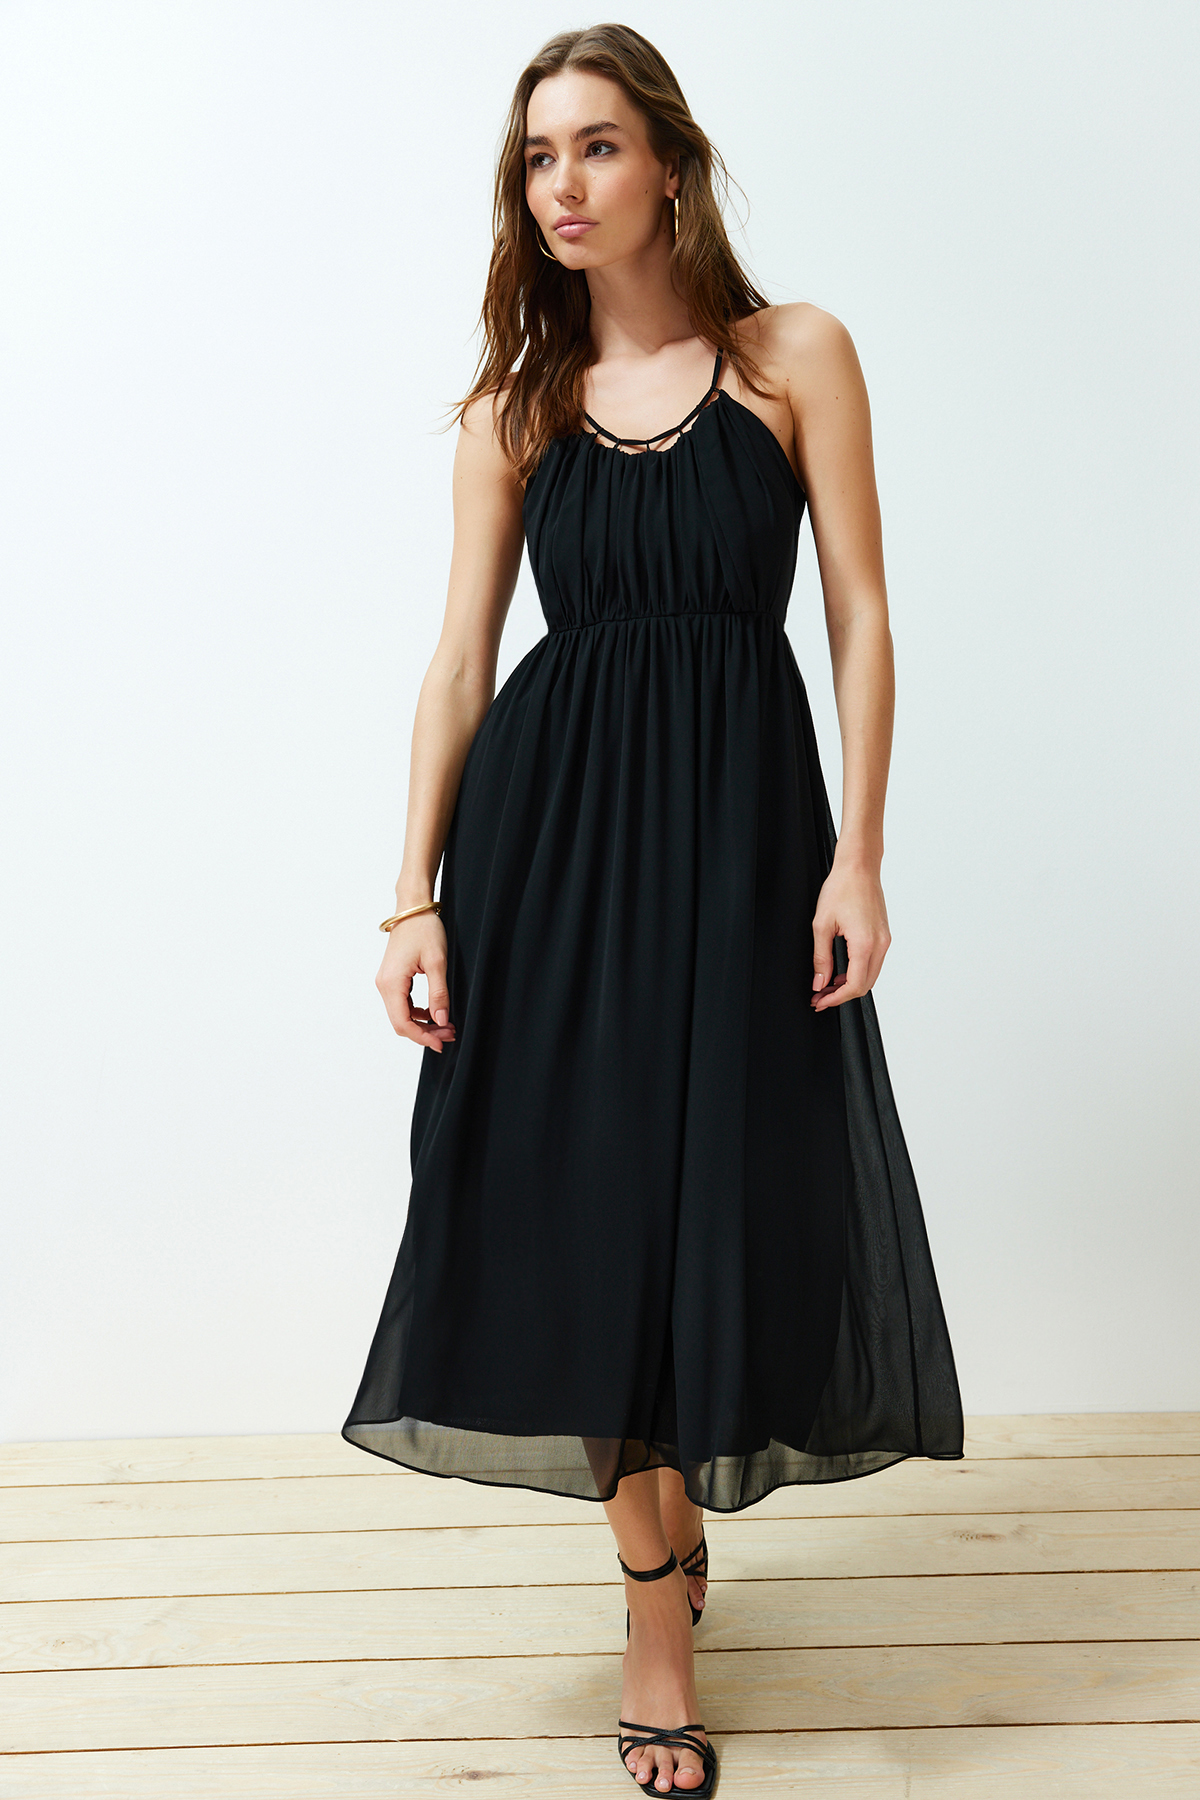 Trendyol Black A-line Collar Detailed Lined Chiffon Woven Midi Dress